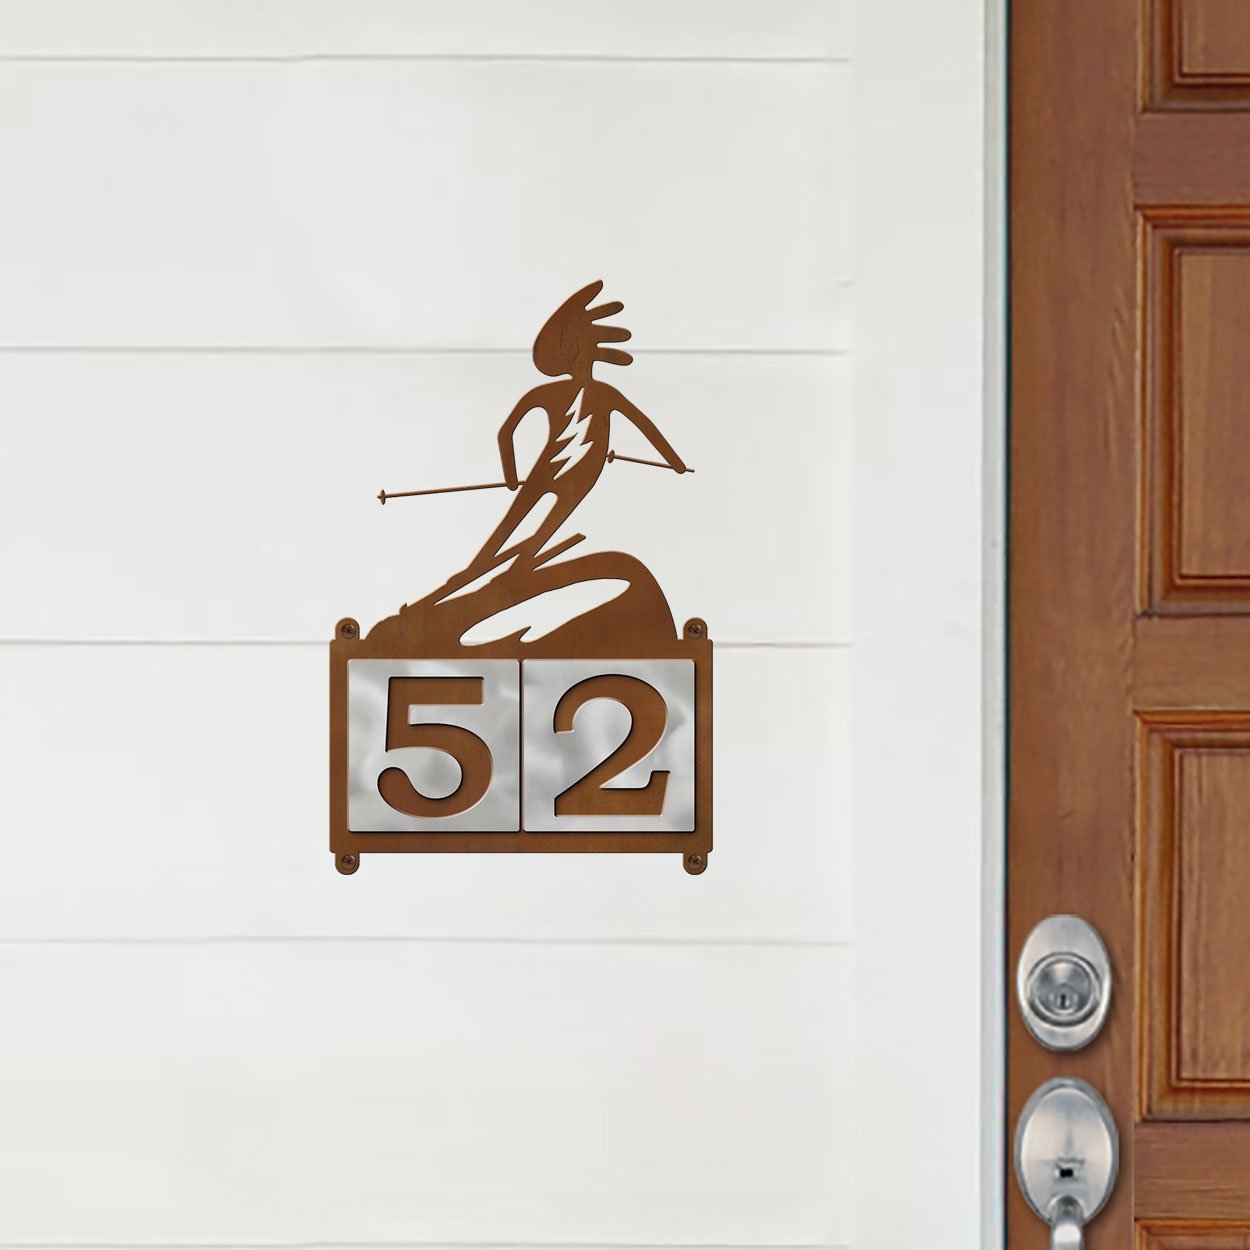 607162 - Kokopelli Alpine Skier Design 2-Digit Horizontal 4-inch Tile Outdoor House Numbers